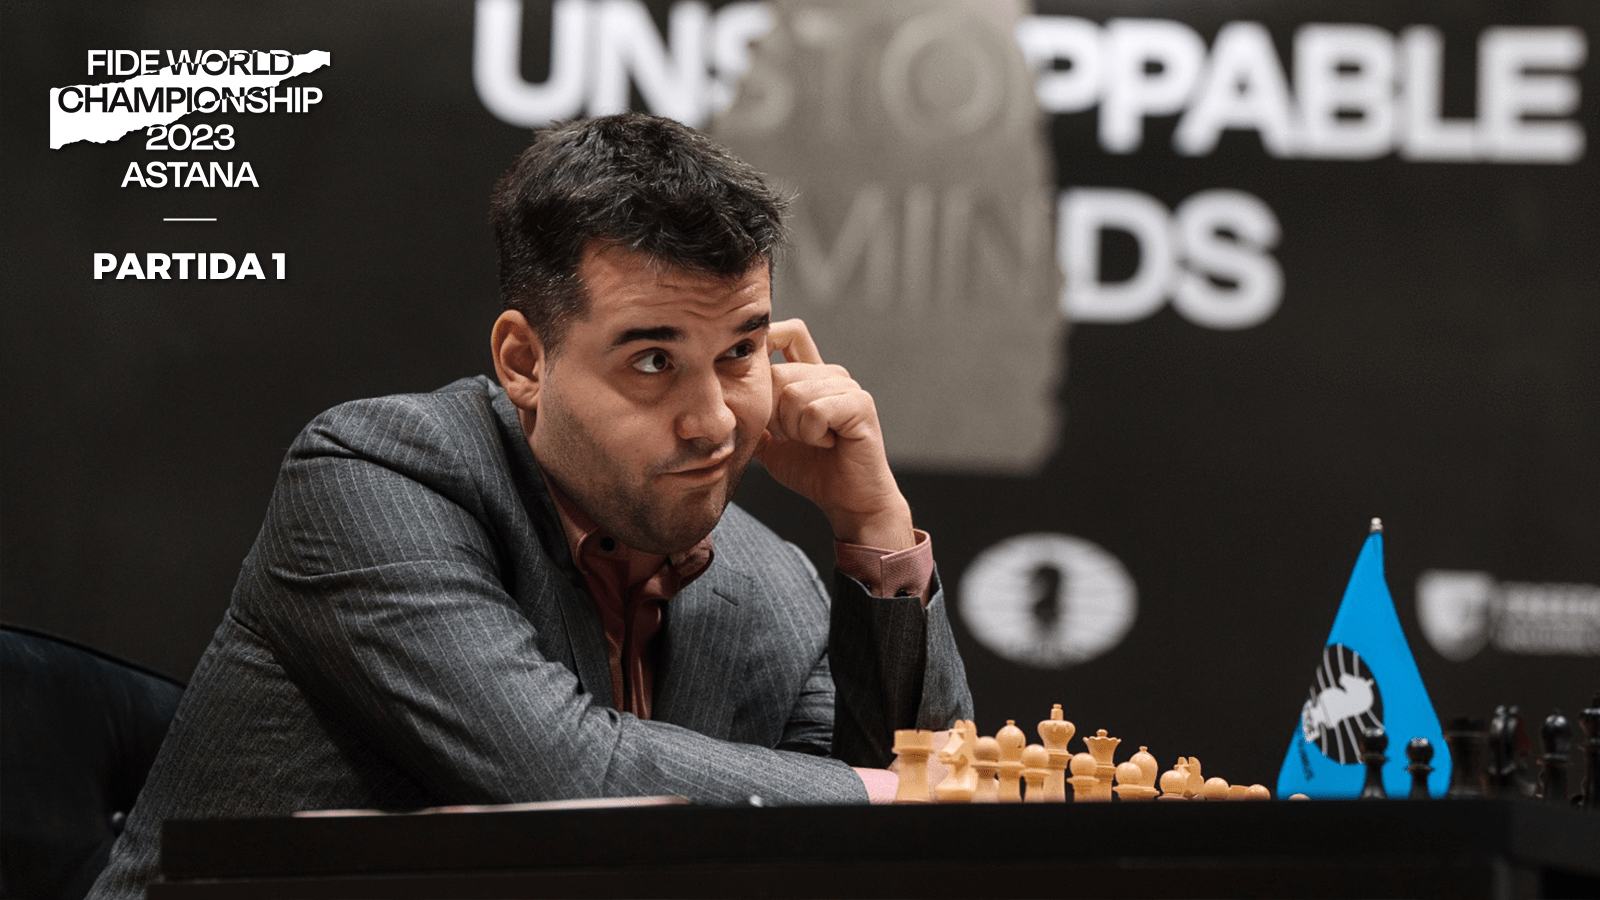 Ian Nepomniachtchi x Ding Liren - FIDE World Championship 2023 - Partida 6  